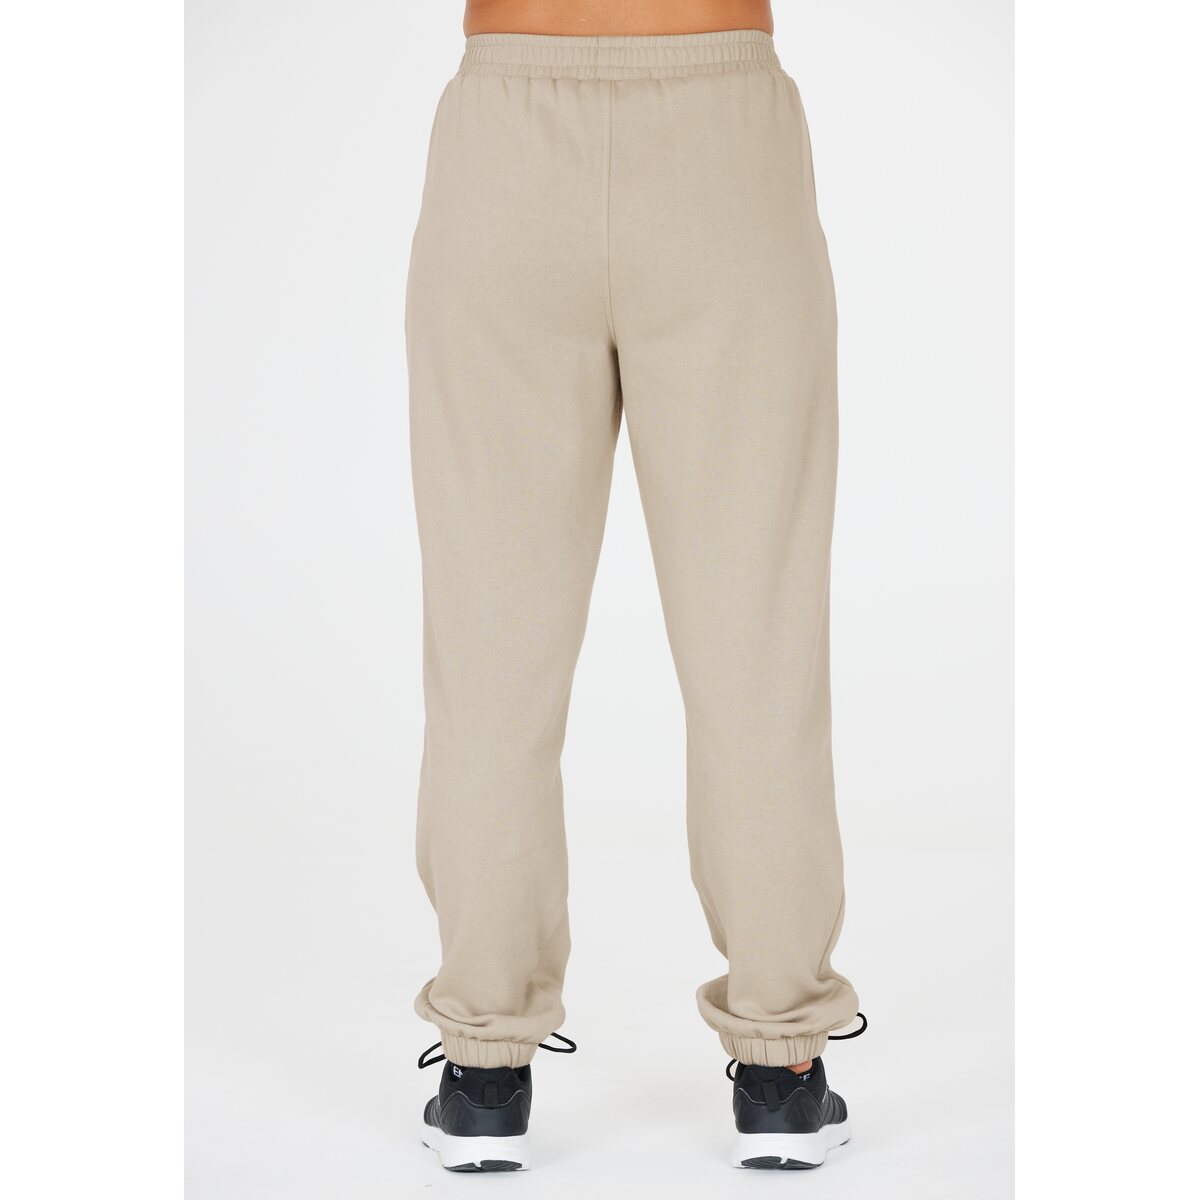 Athlecia Asport Womenswear Pants 3 Shaws Department Stores